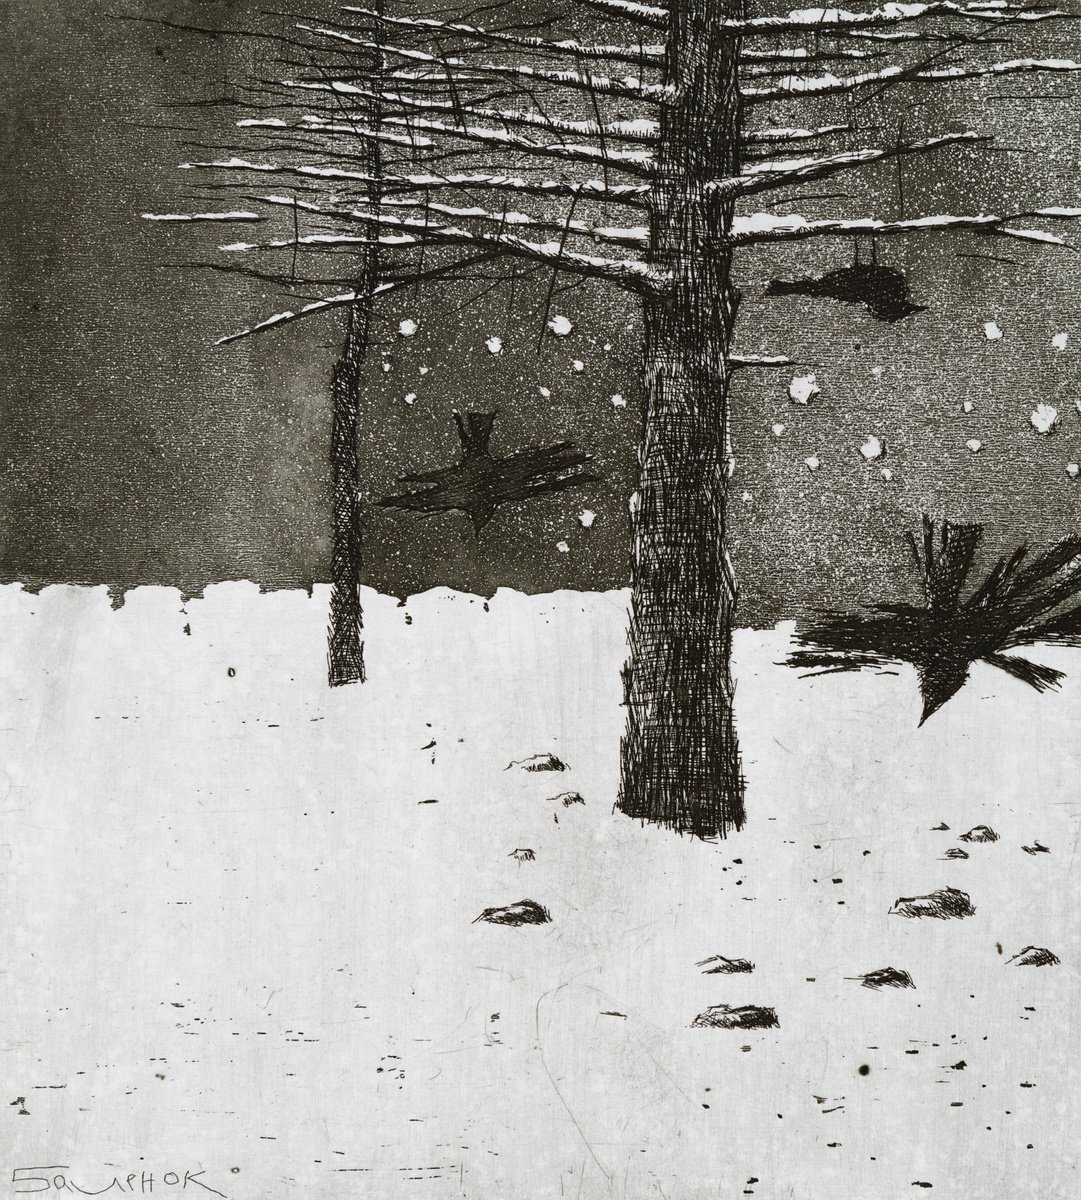 Among the Falling Birds by Sergei Balenok